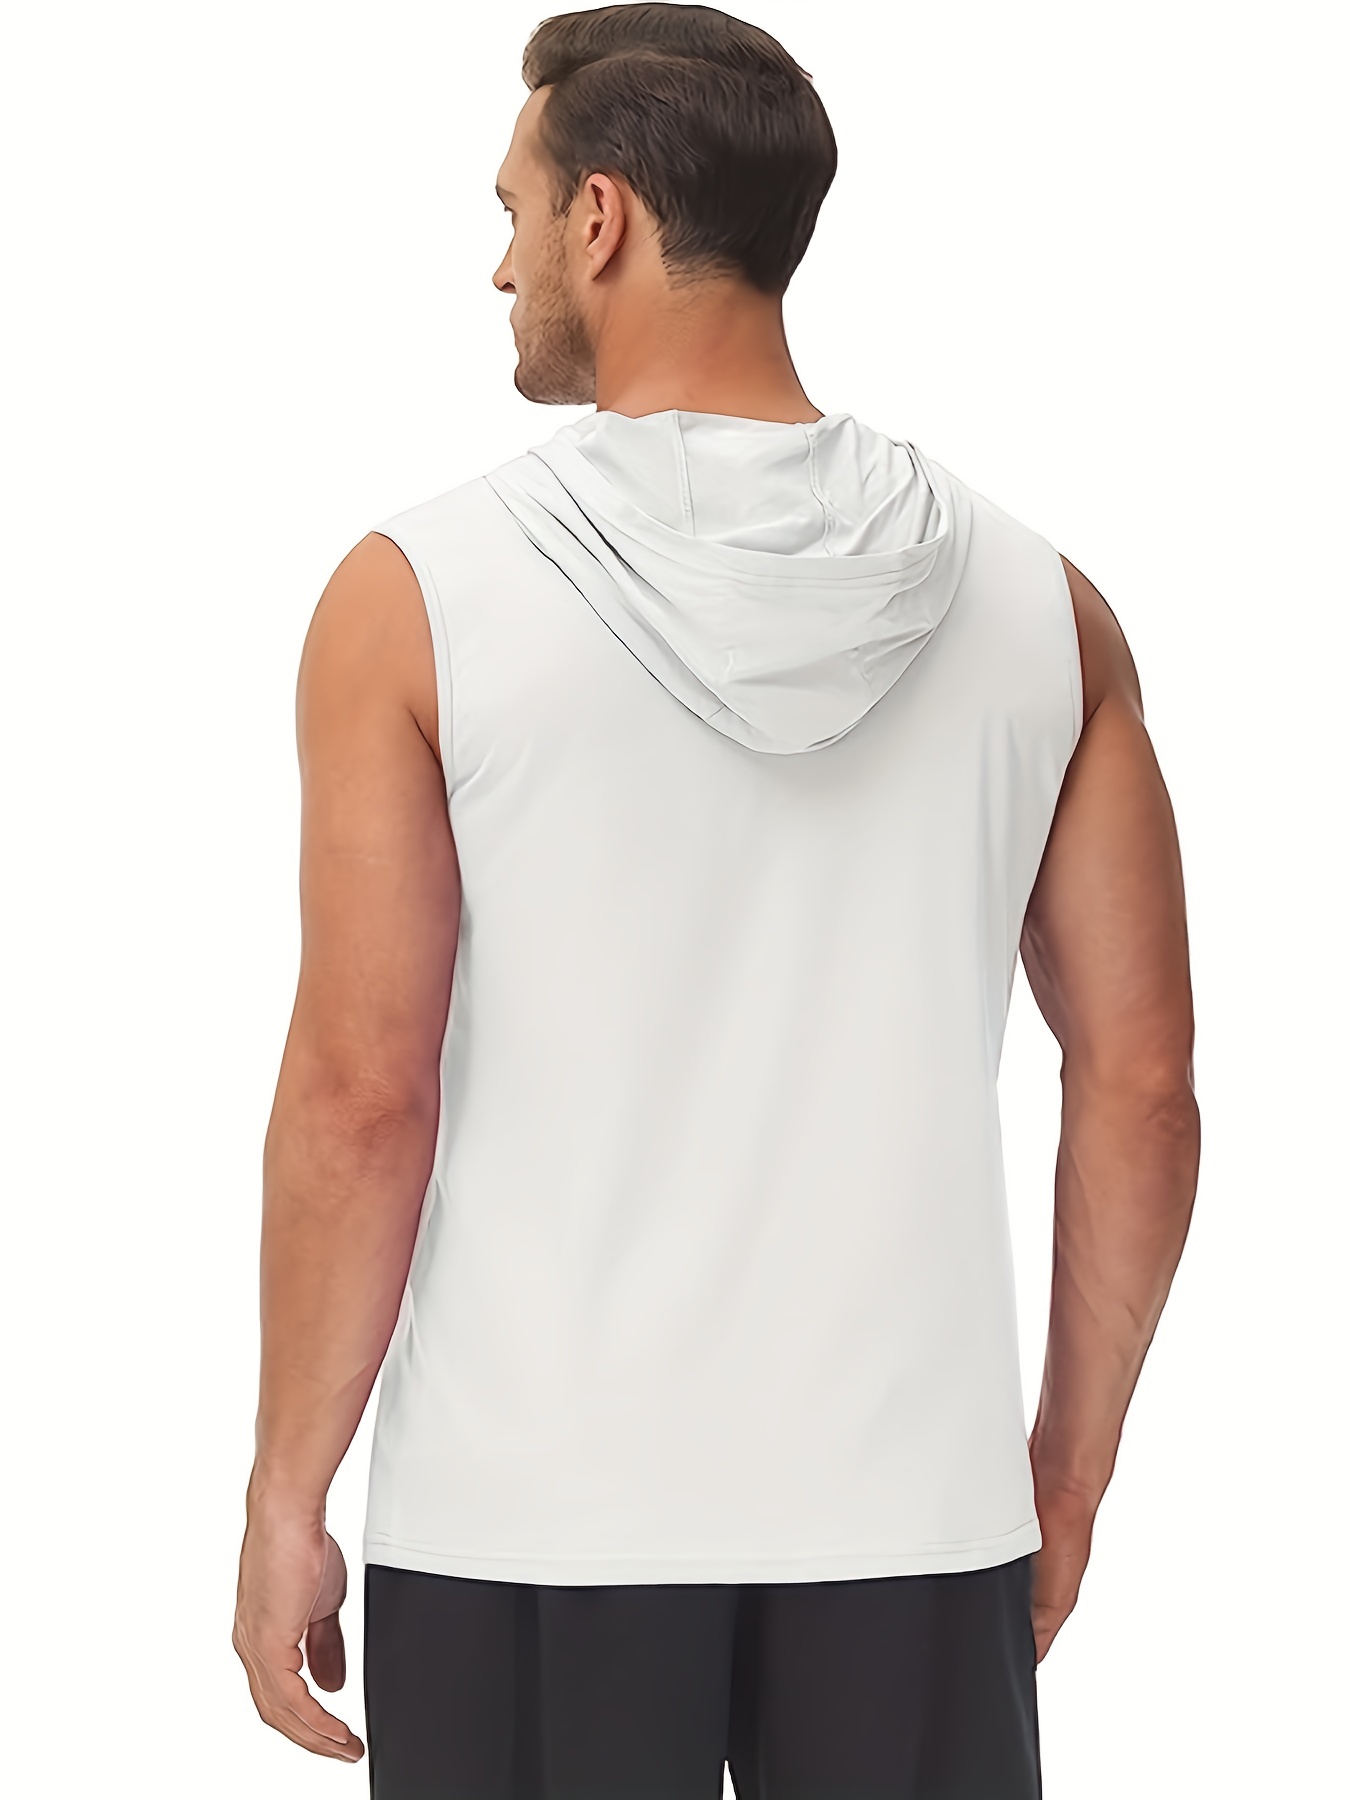 Camiseta Tirantes Blanca The Mecca. - SportGim